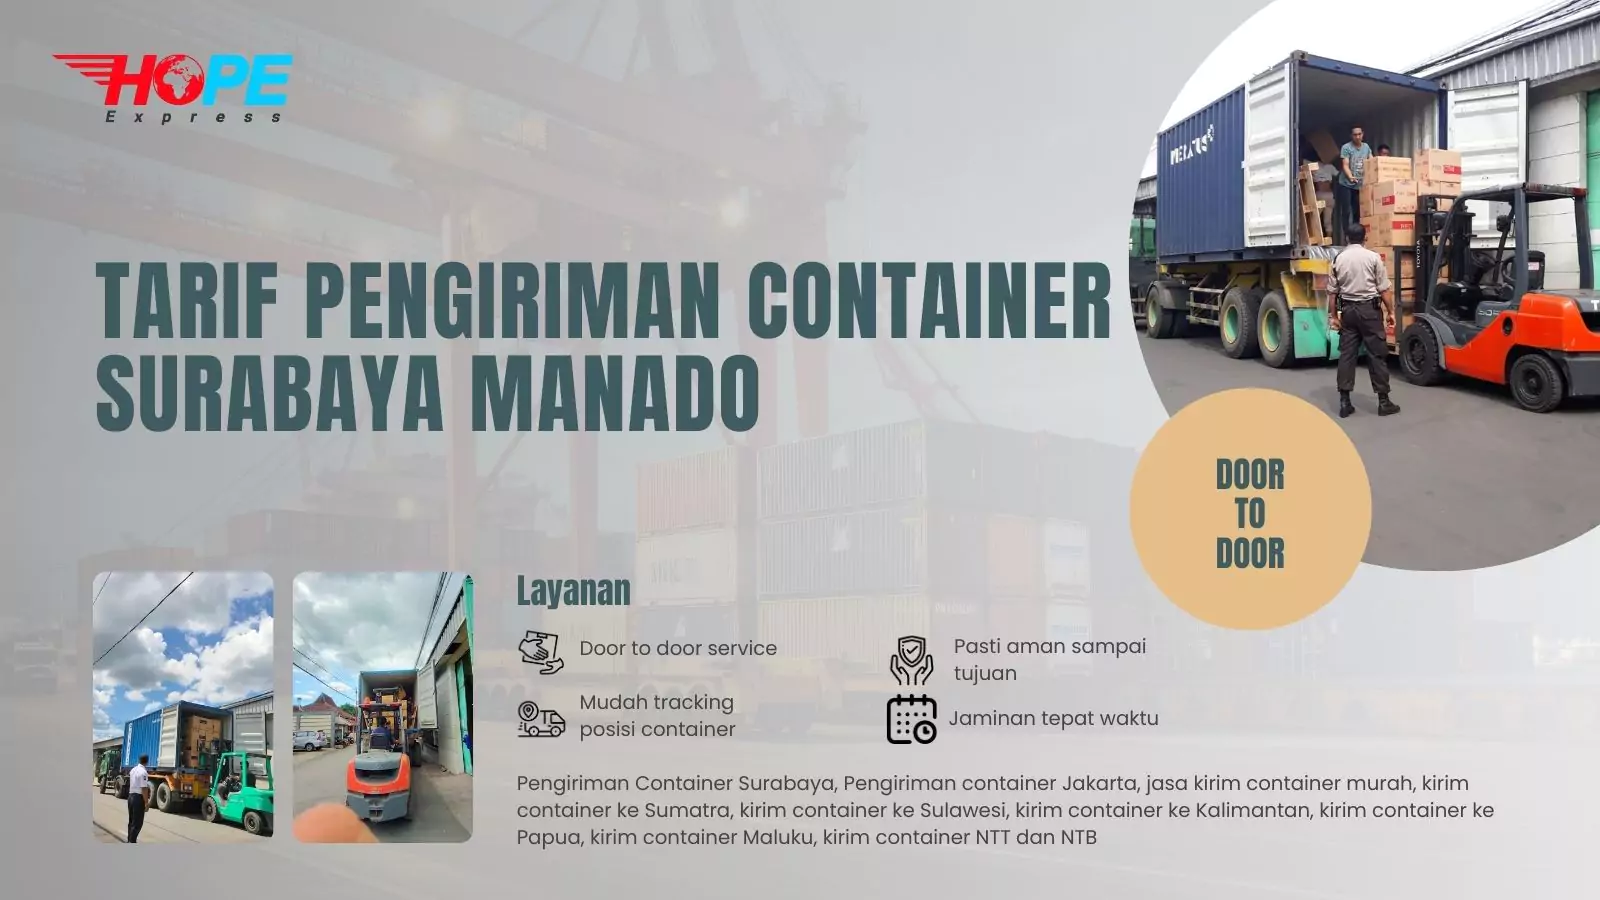 Tarif Pengiriman Container Surabaya Manado